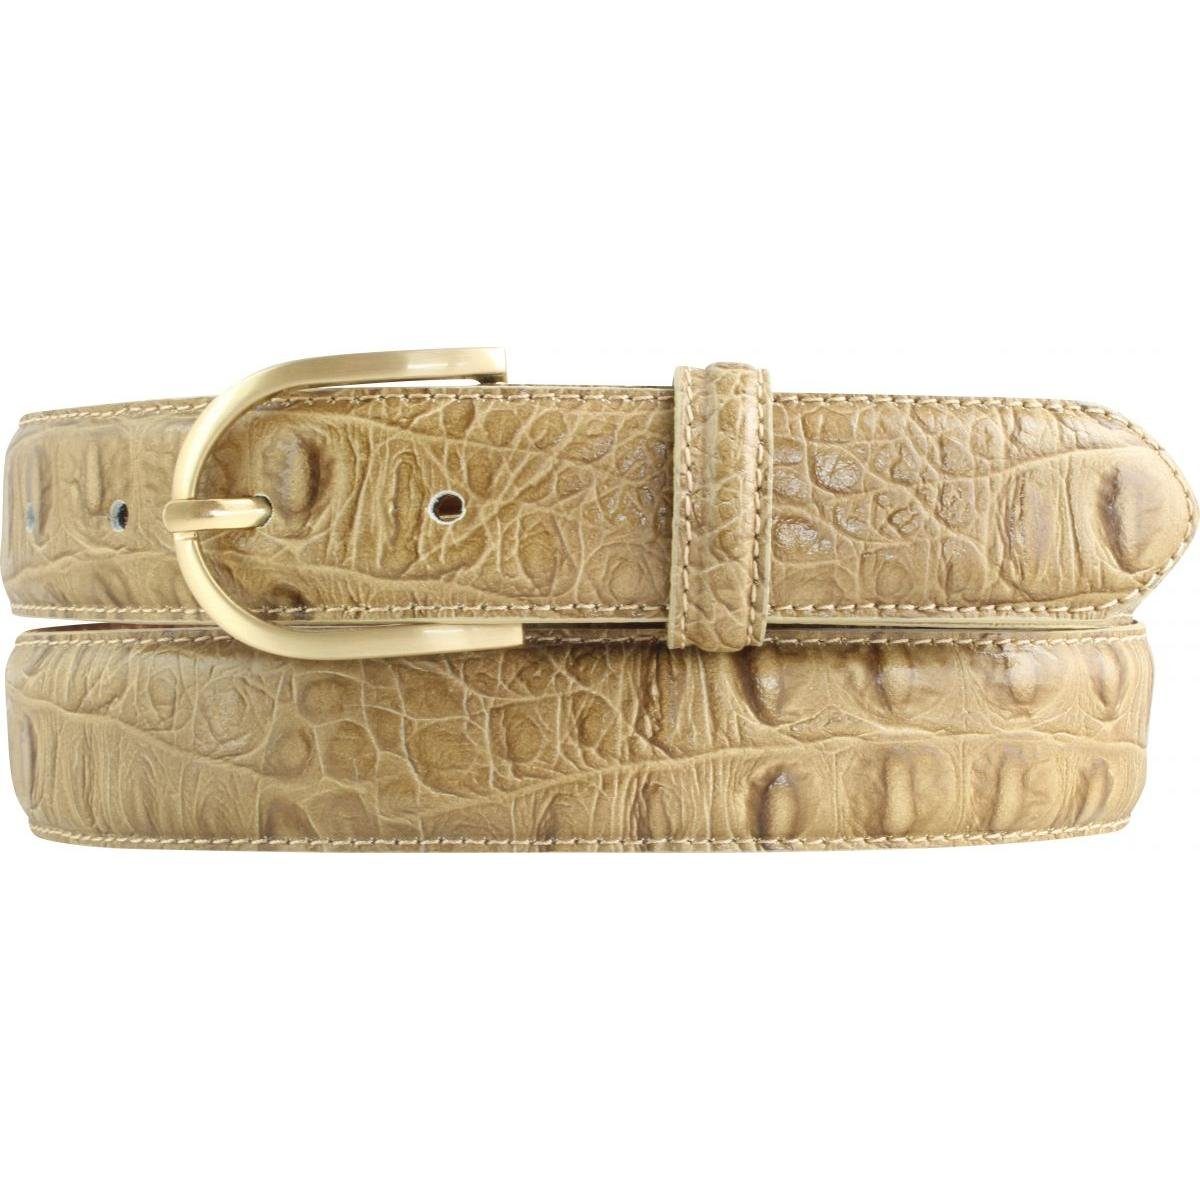 BELTINGER Ledergürtel Damen-Gürtel mit Krokoprägung 3 cm - Leder-Gürtel für Damen 30mm Kroko Schlamm, Gold